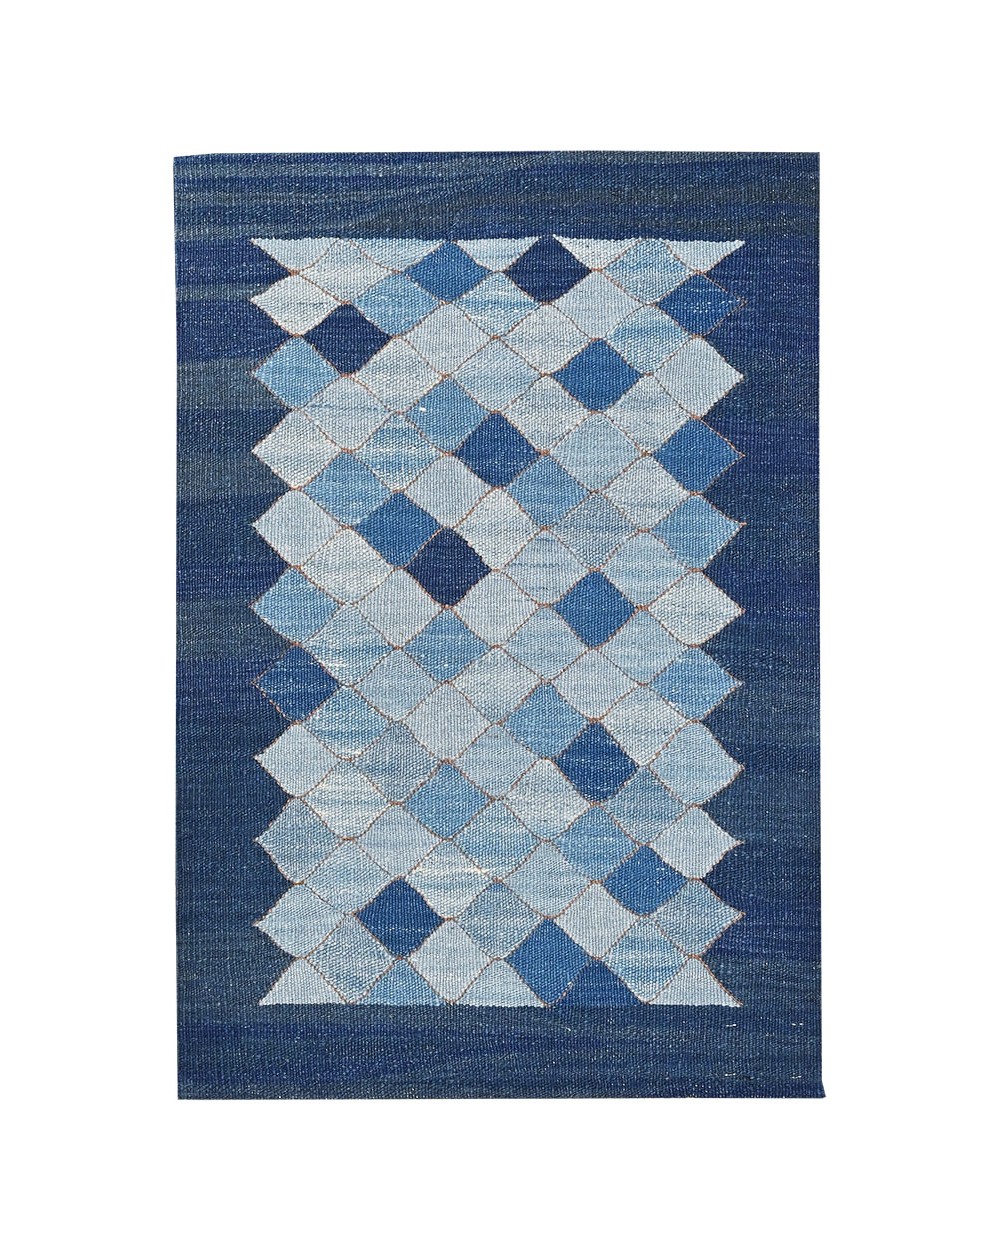 Arlequin Blue - Kilim rug